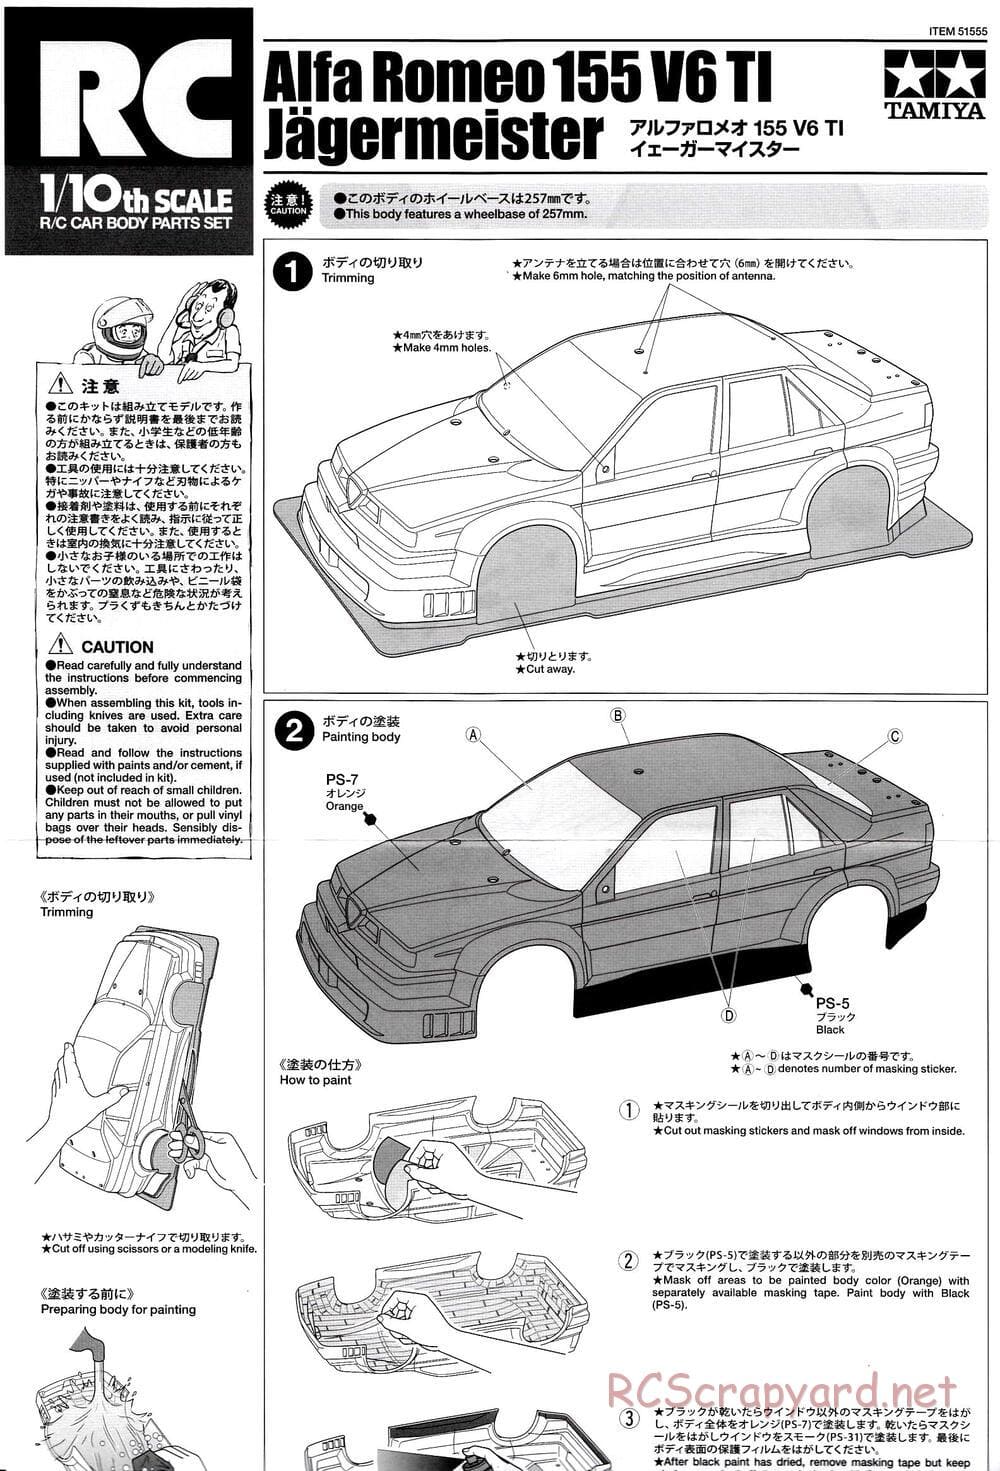 Tamiya - Alfa Romeo 155 V6 TI Jgermeister - TT-02 Chassis - Body Manual - Page 1